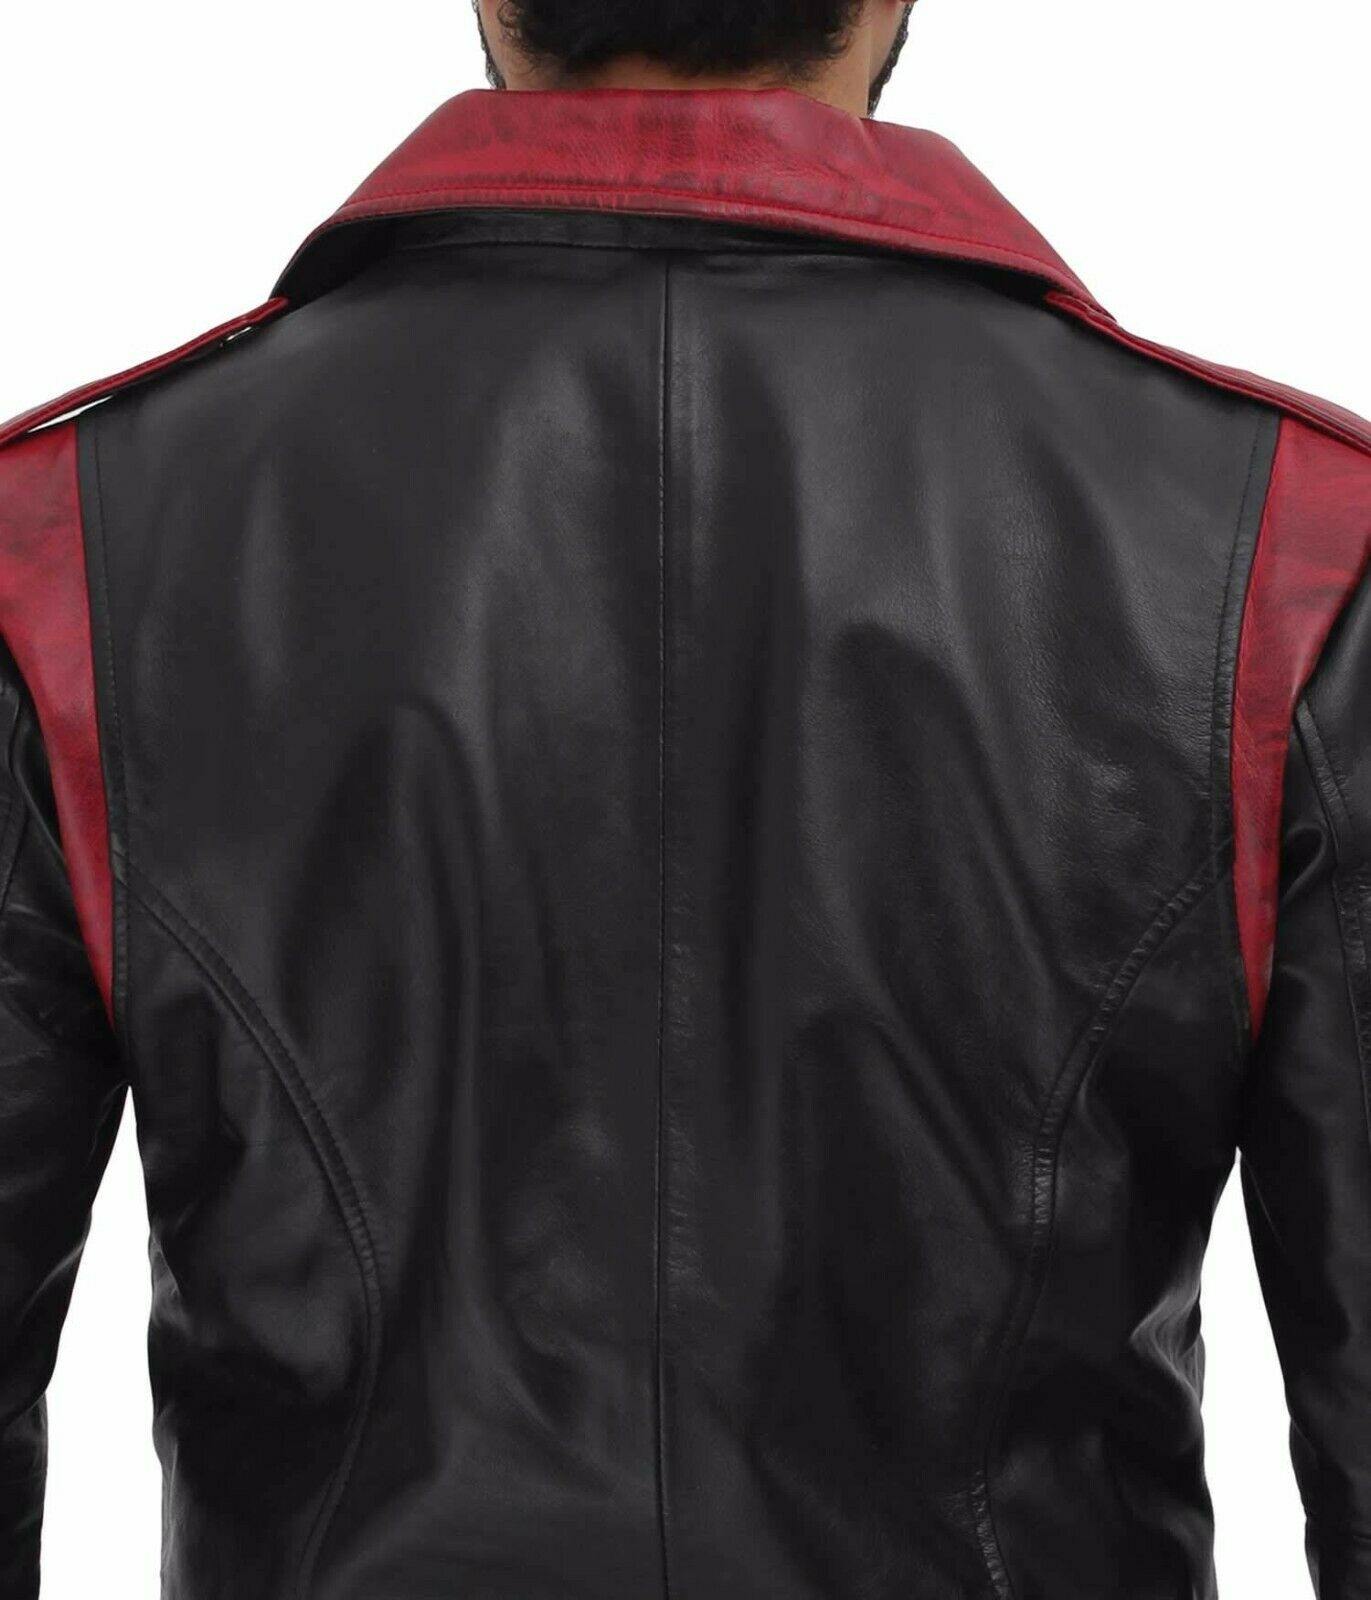 Spine Spark Black Maroon Brando Style Biker Leather Jacket